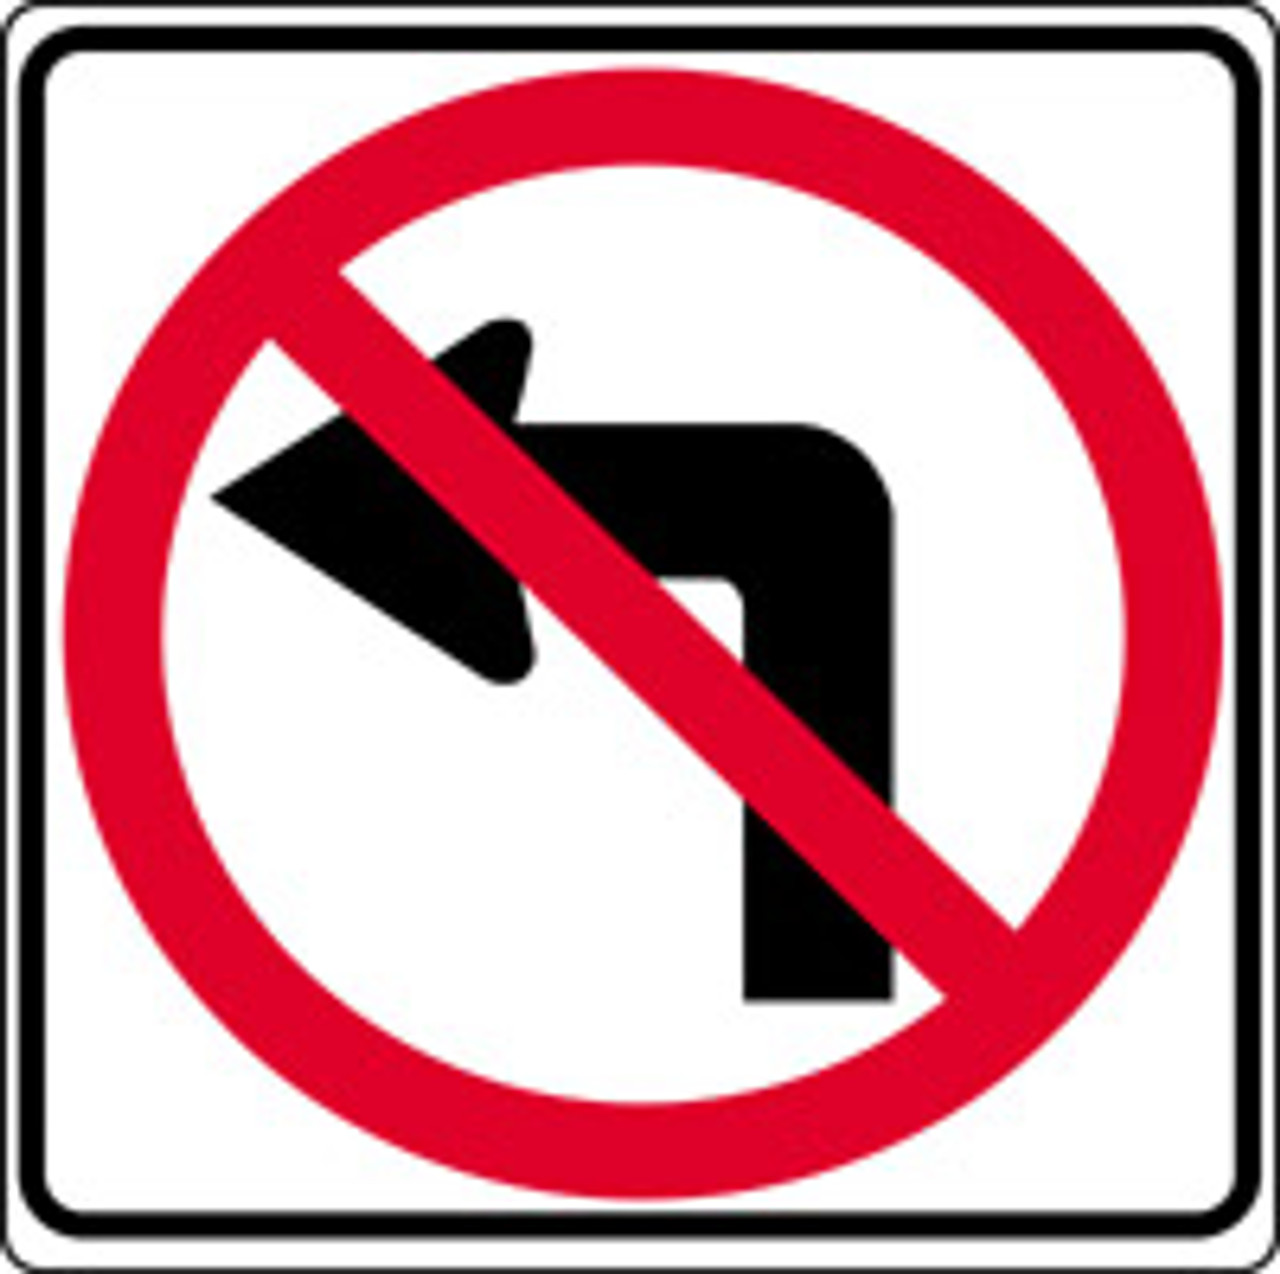 left turn arrow symbol